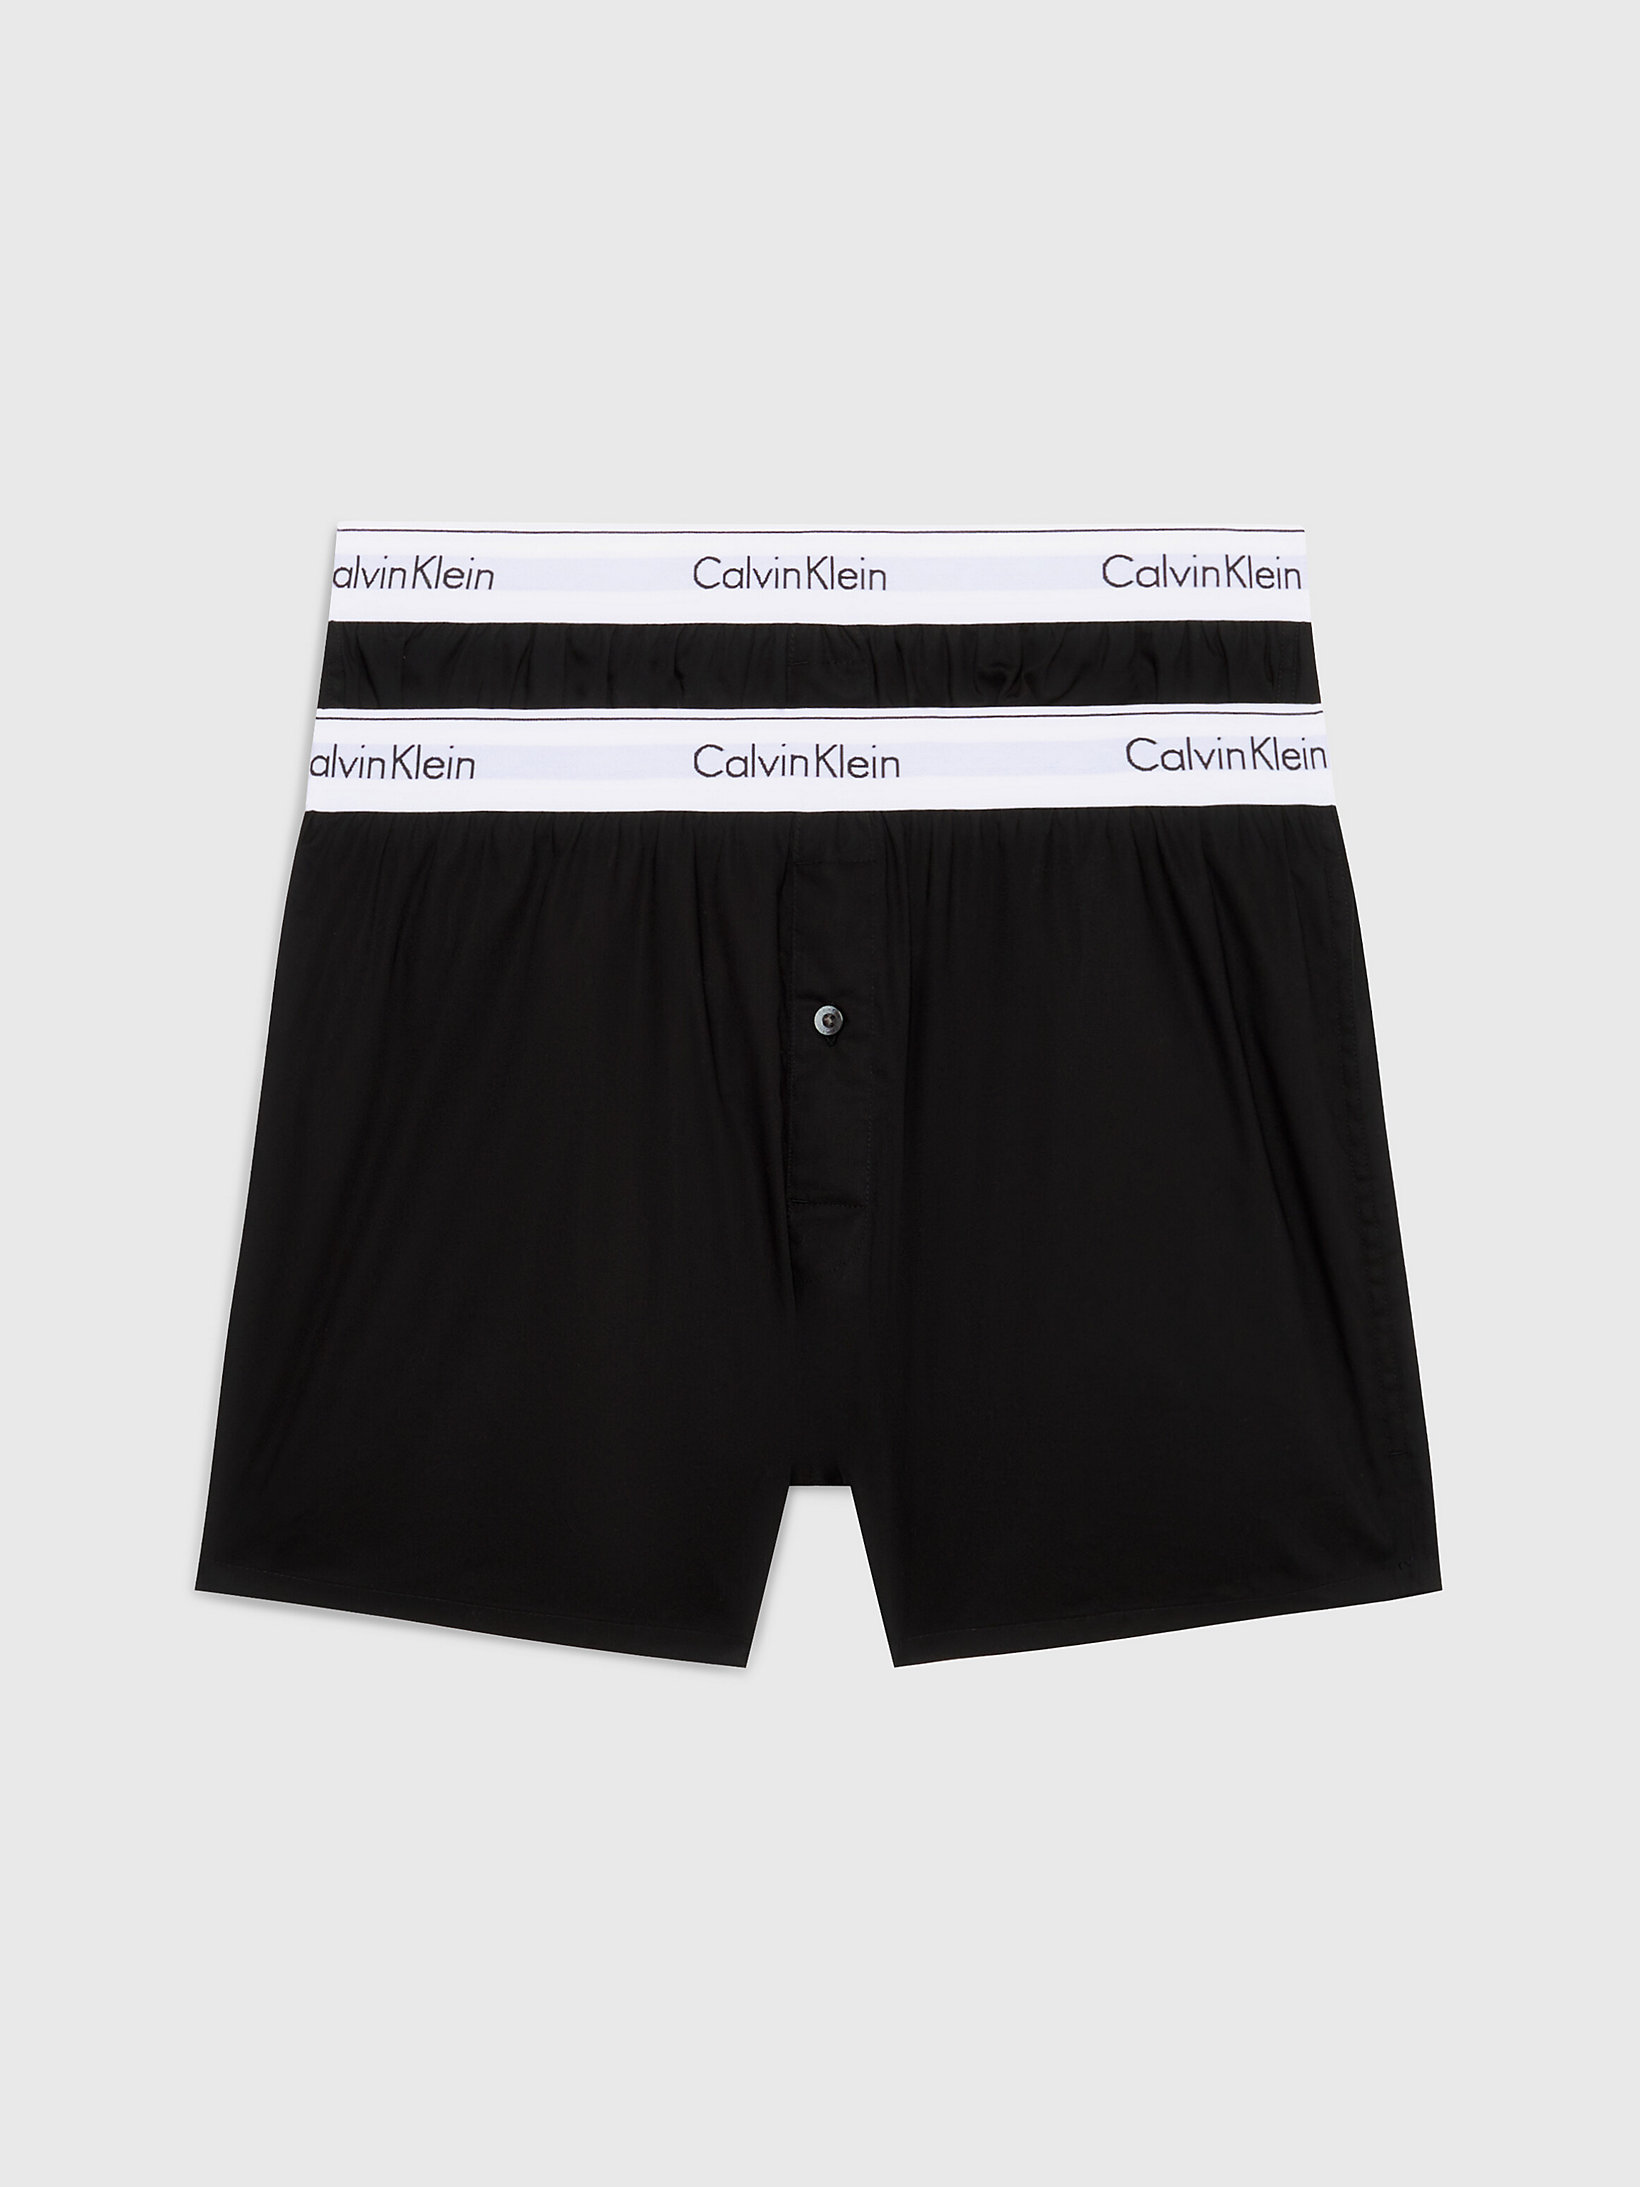 Black/black 2 Pack Slim Fit Boxers - Modern Cotton undefined men Calvin Klein